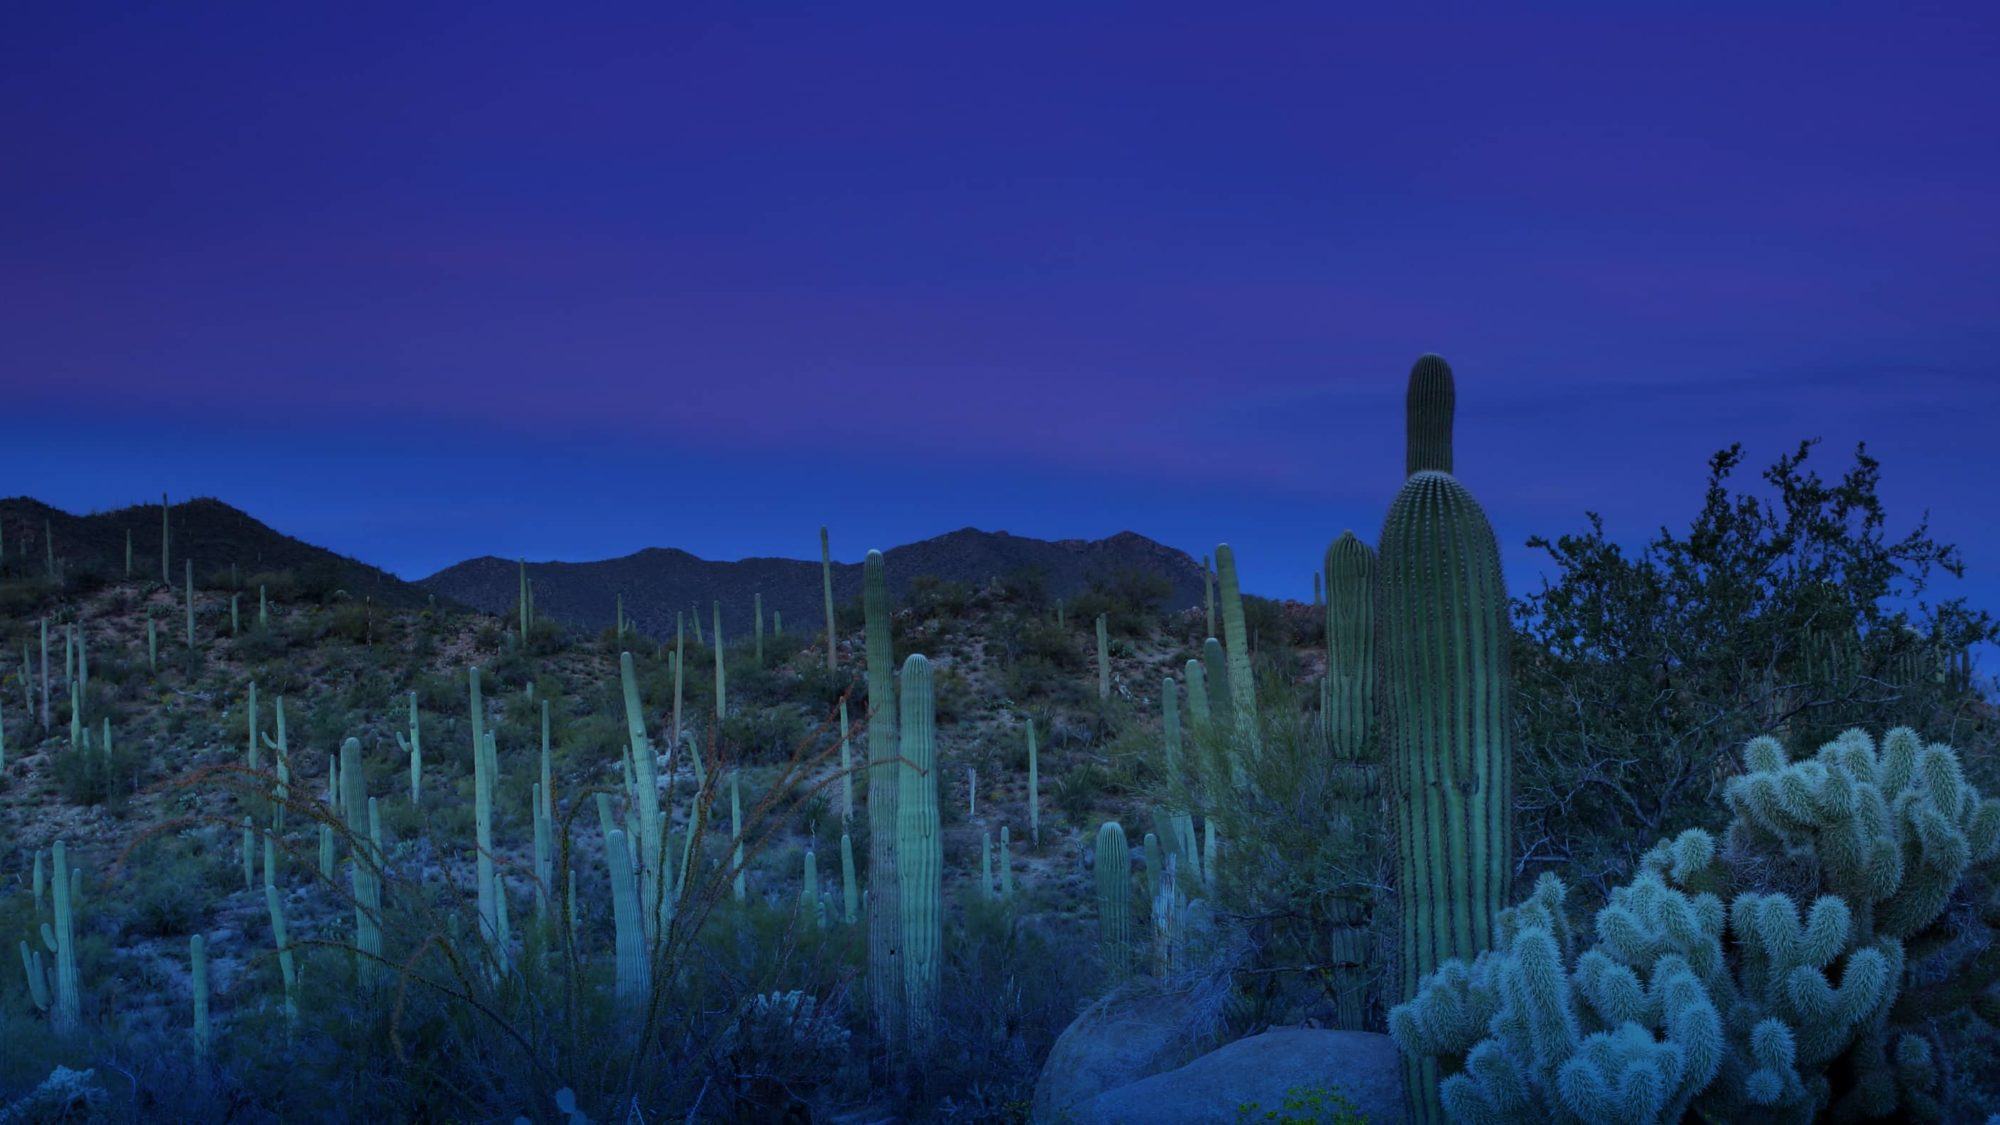 cacti in the desert at night